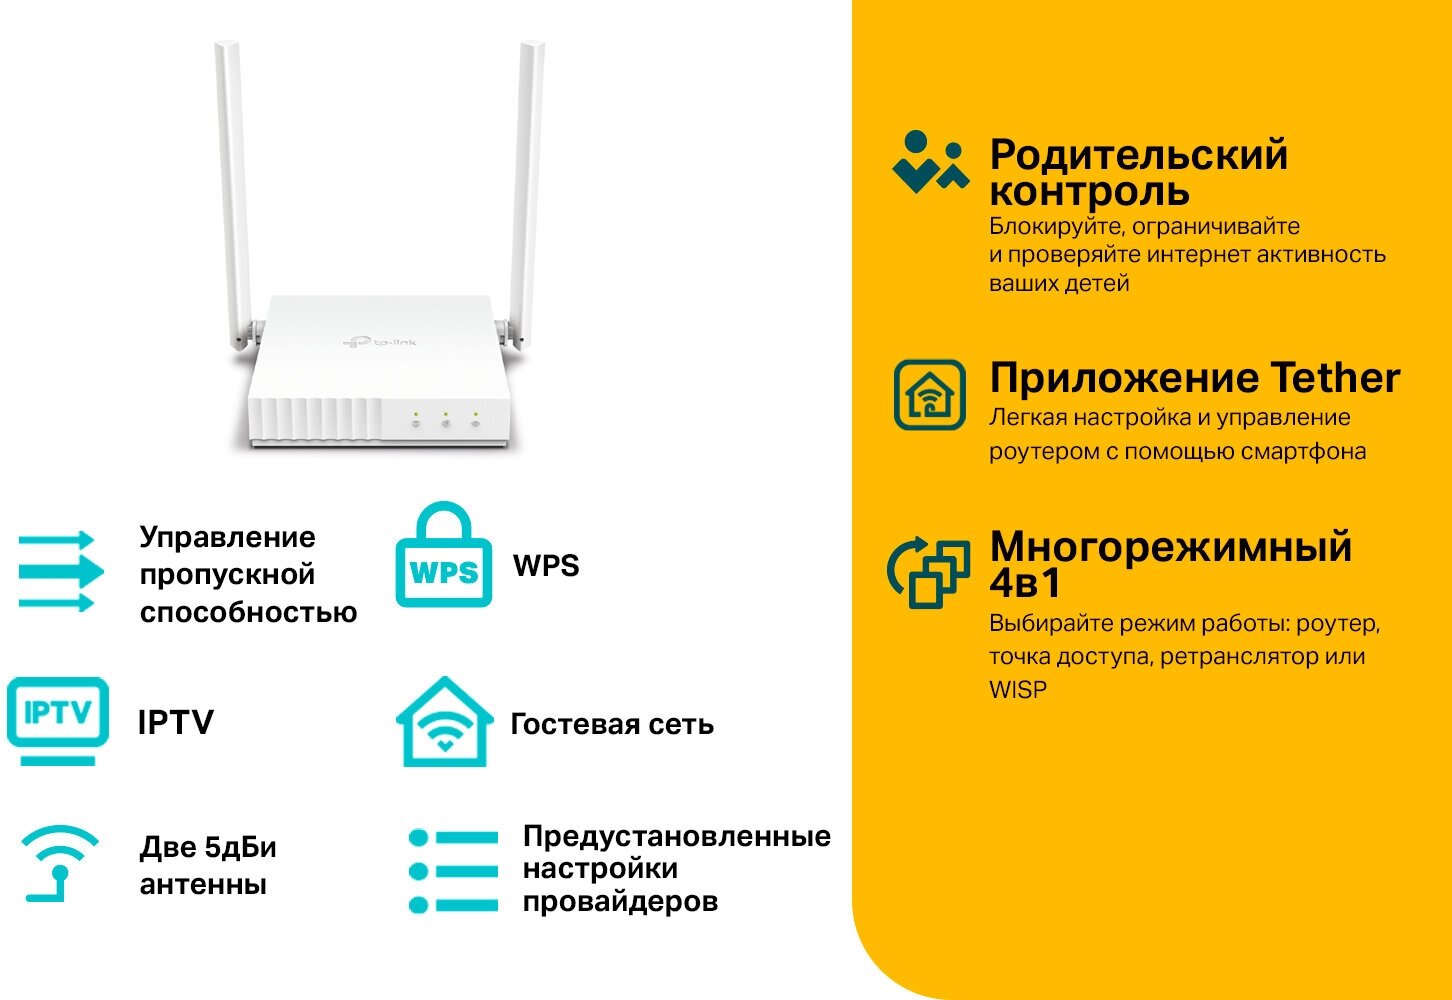 Wi-Fi роутер TP-LINK TL-WR844N 802.11bgn 300Mbps 2.4 ГГц 4xLAN белый